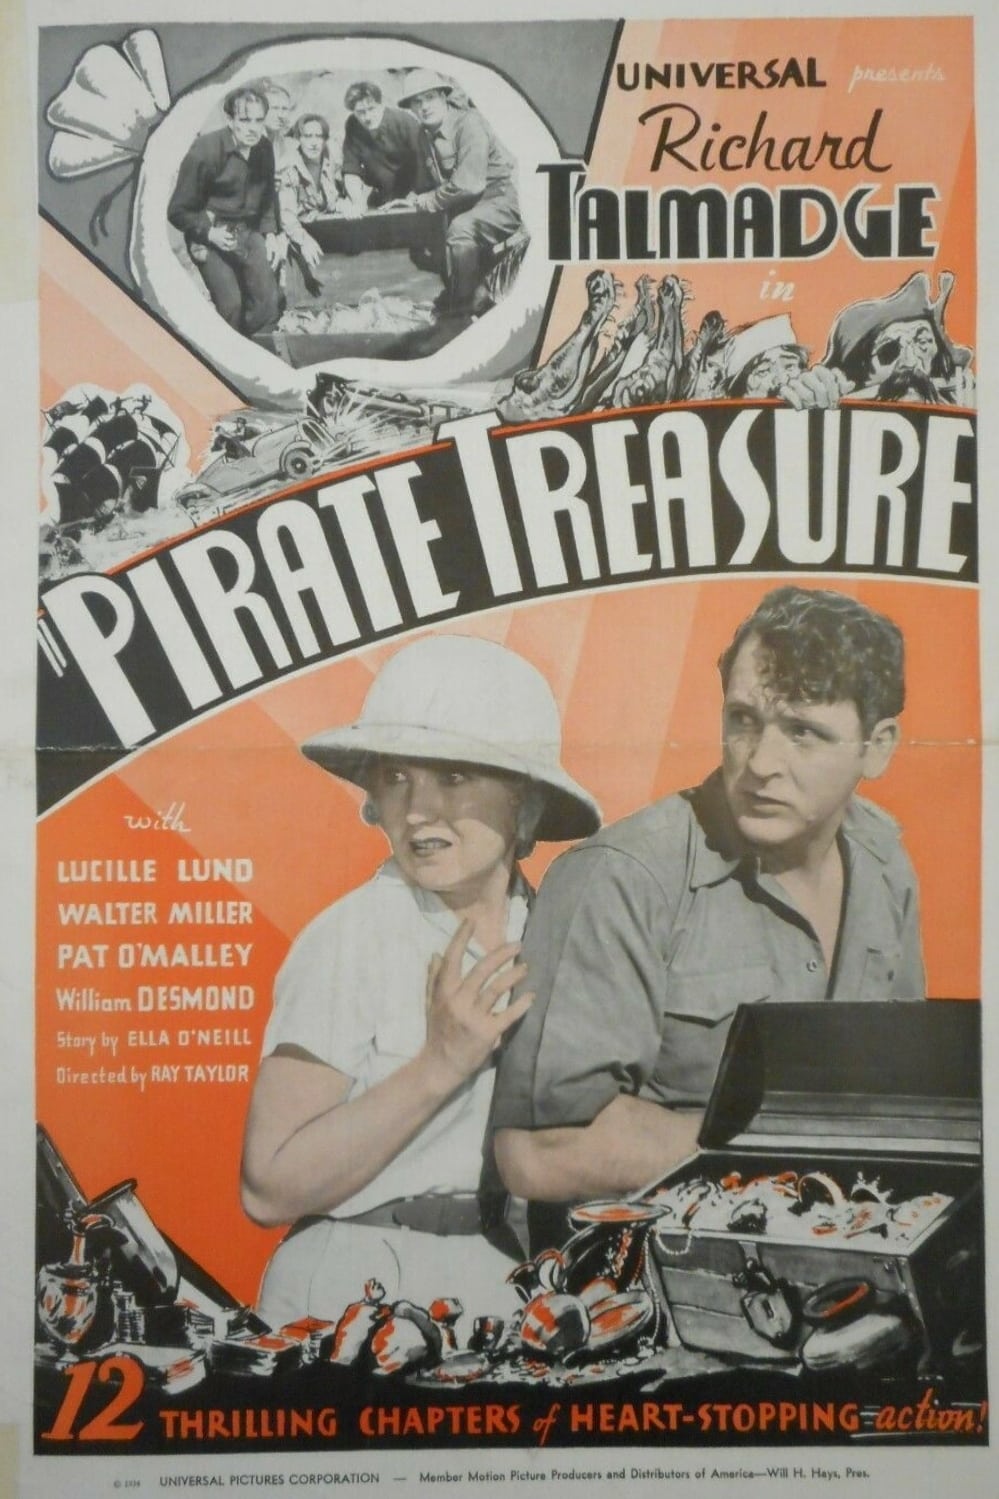 Pirate Treasure (1934)